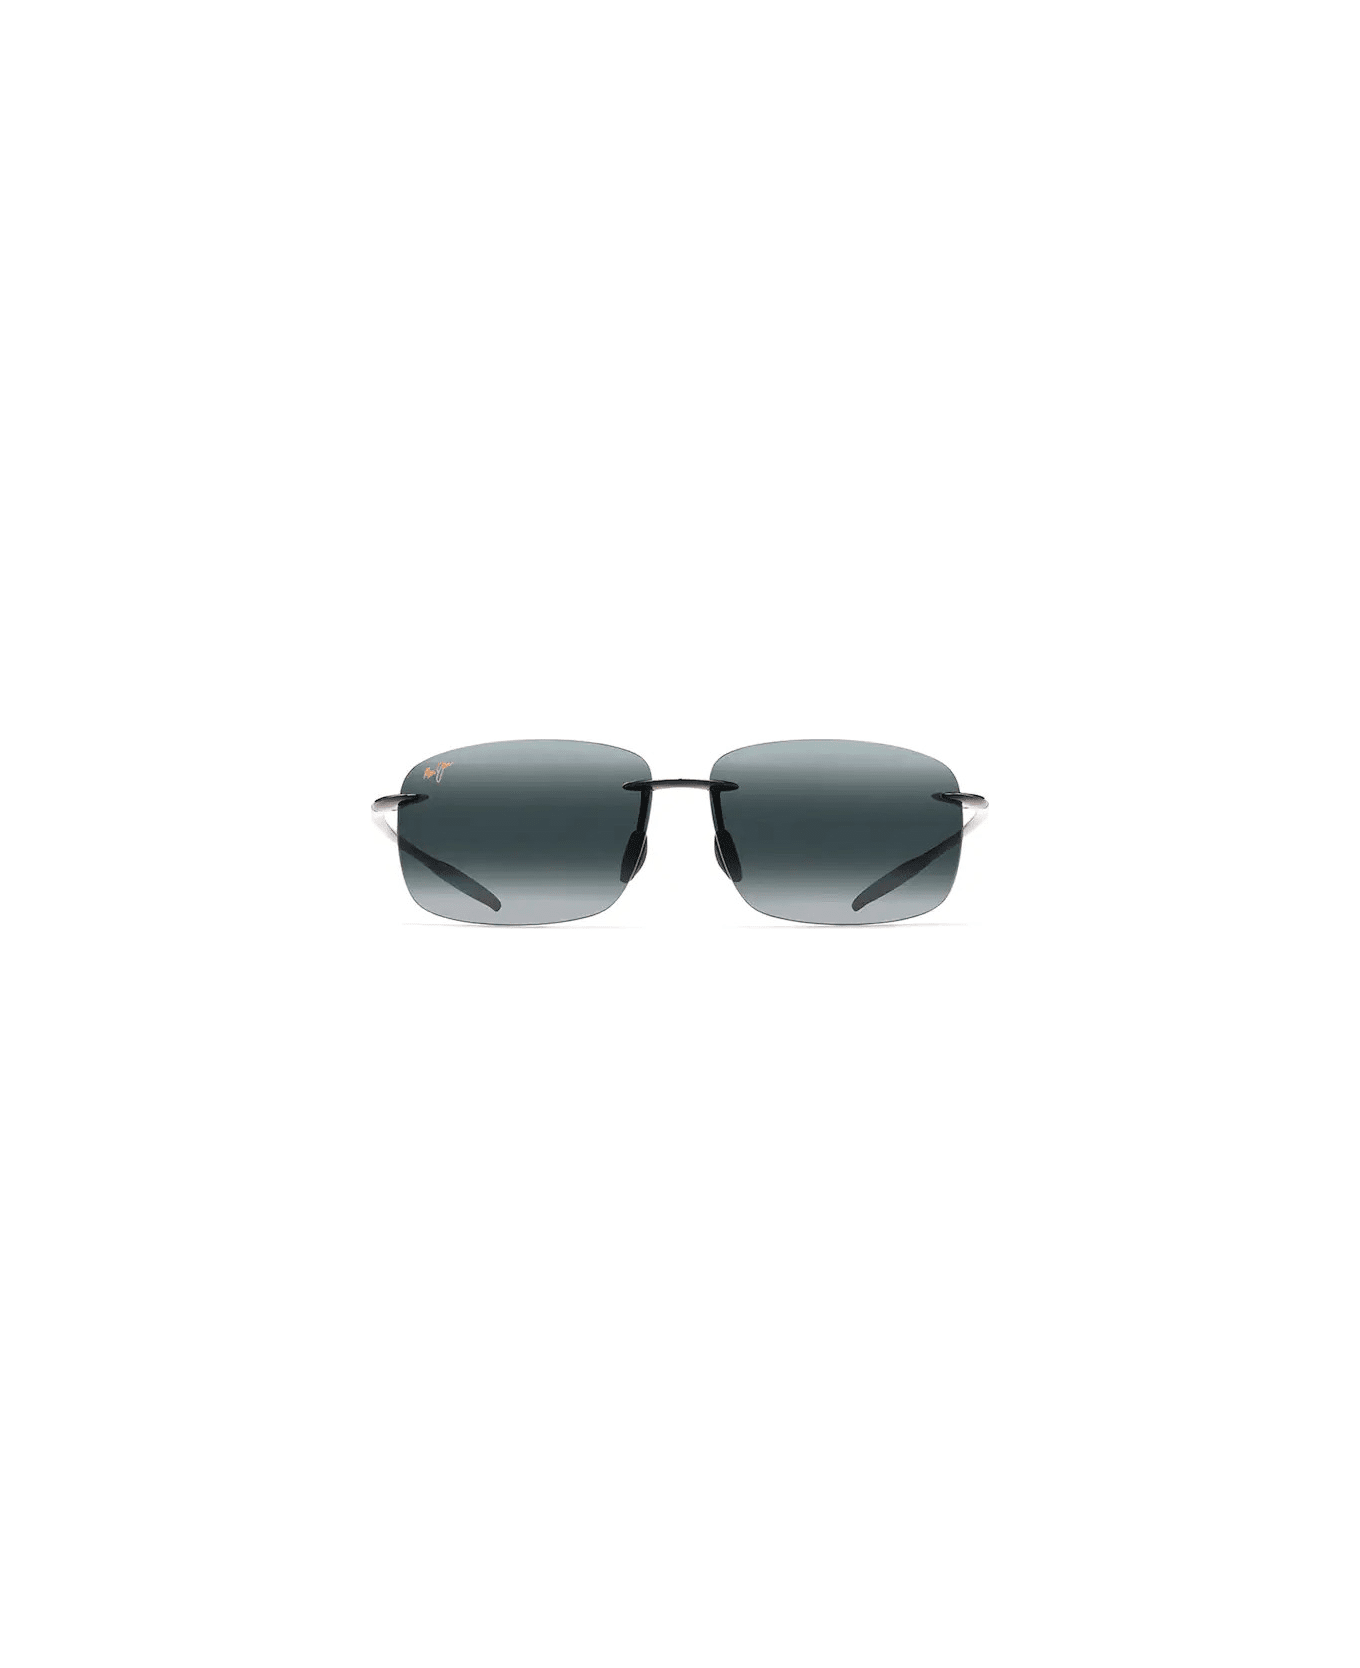 Maui Jim 422 02 Sunglasses - Grigio サングラス